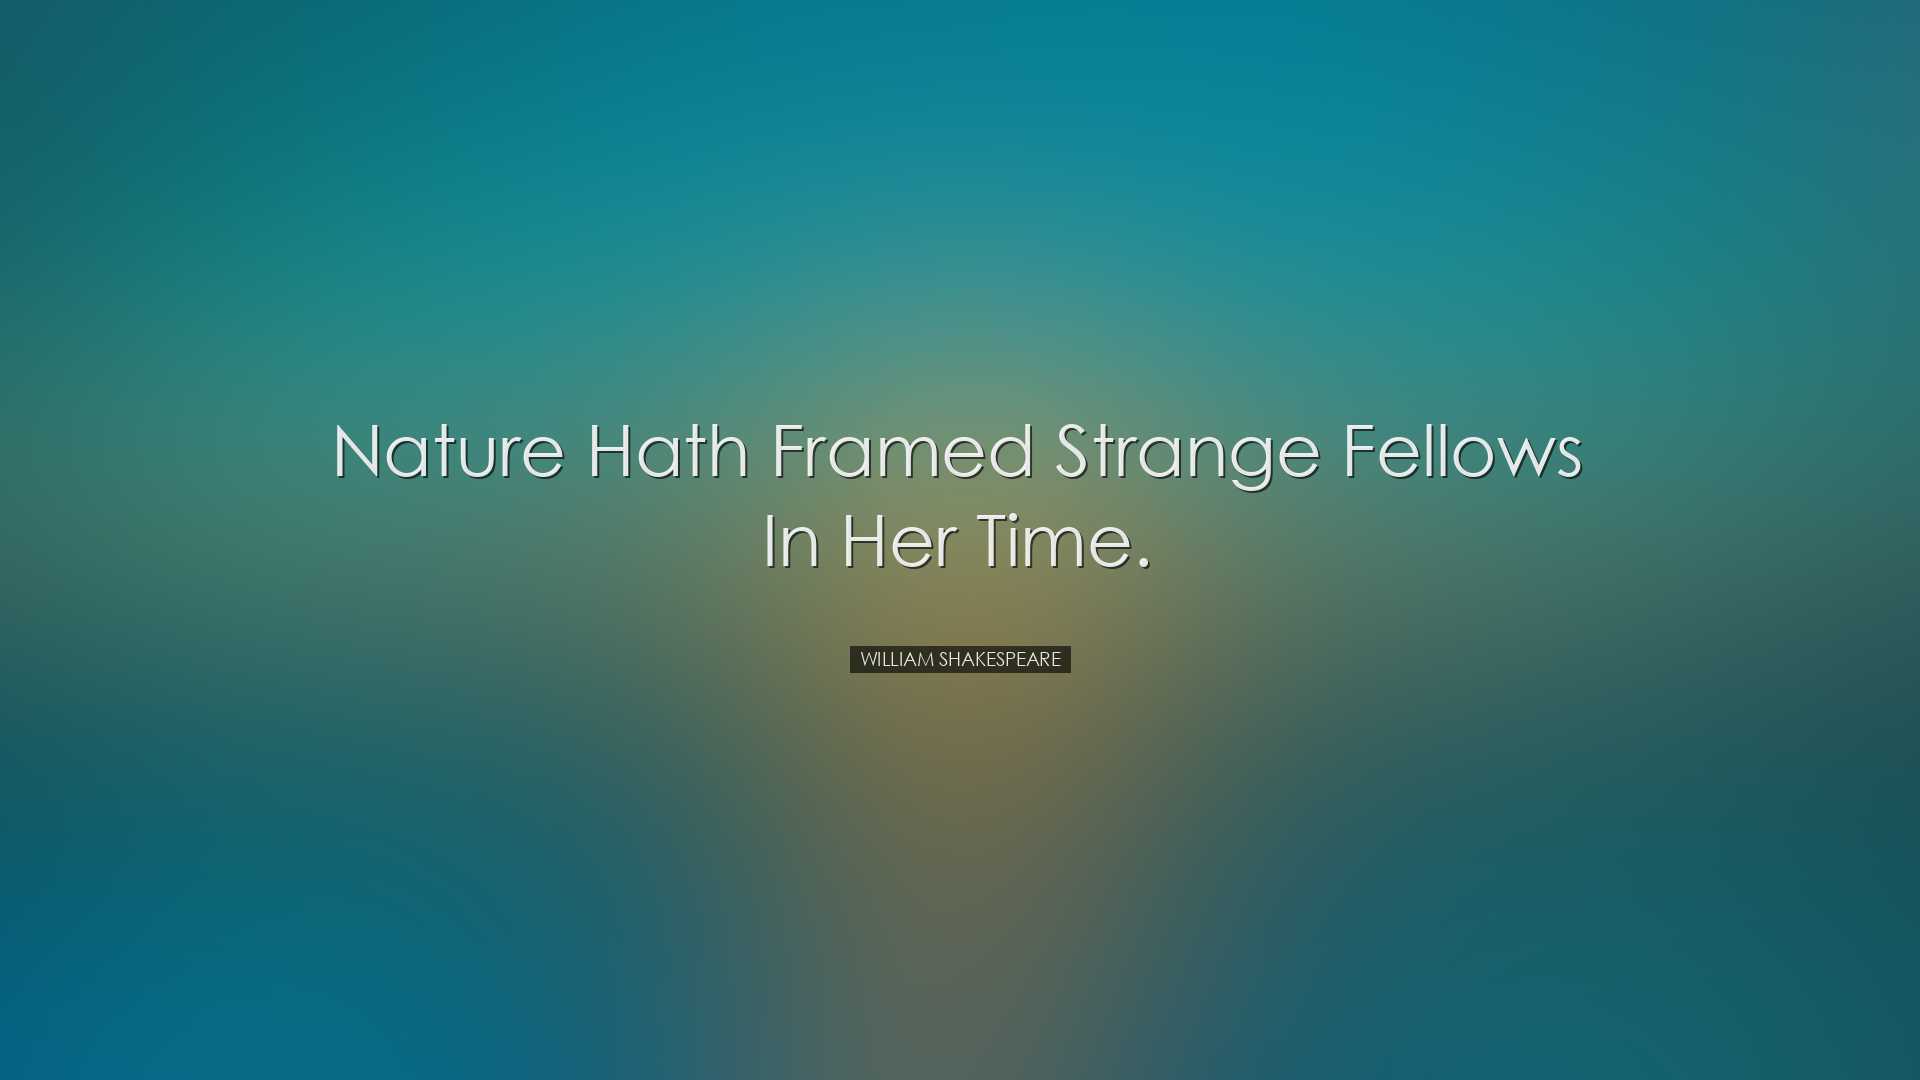 Nature hath framed strange fellows in her time. - William Shakespe